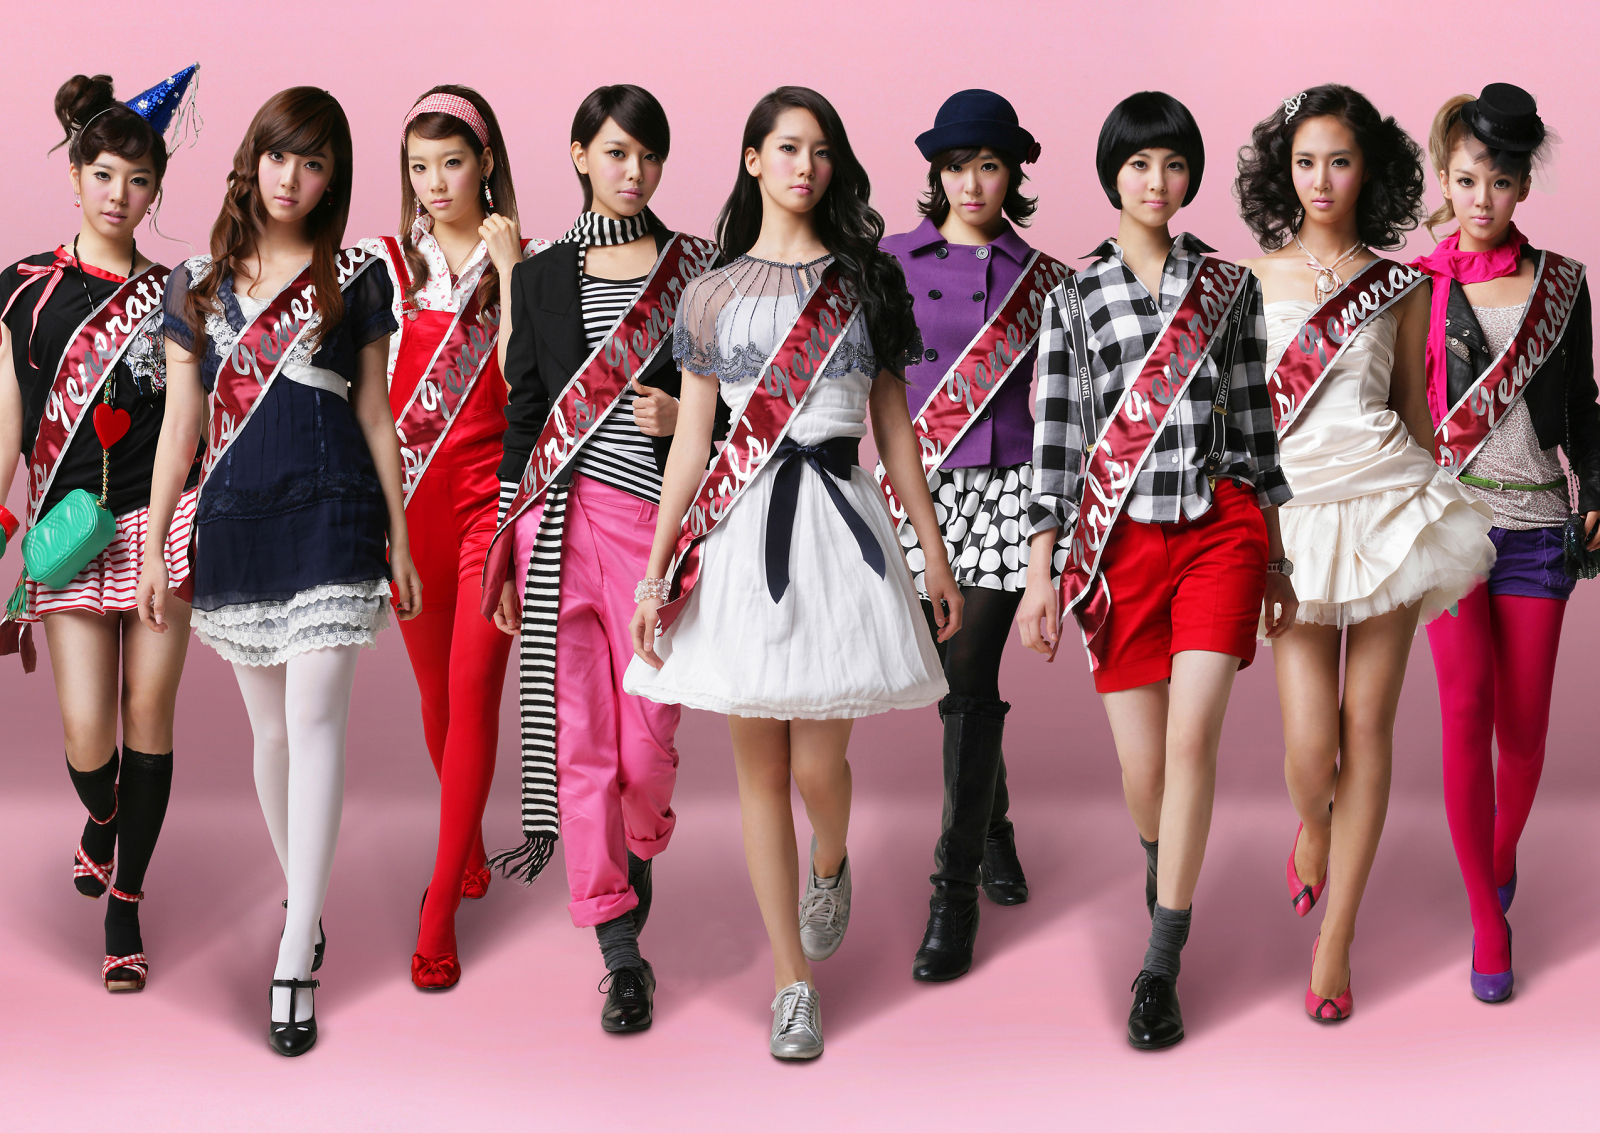 Girls' Generation - Girls' Generation Wiki